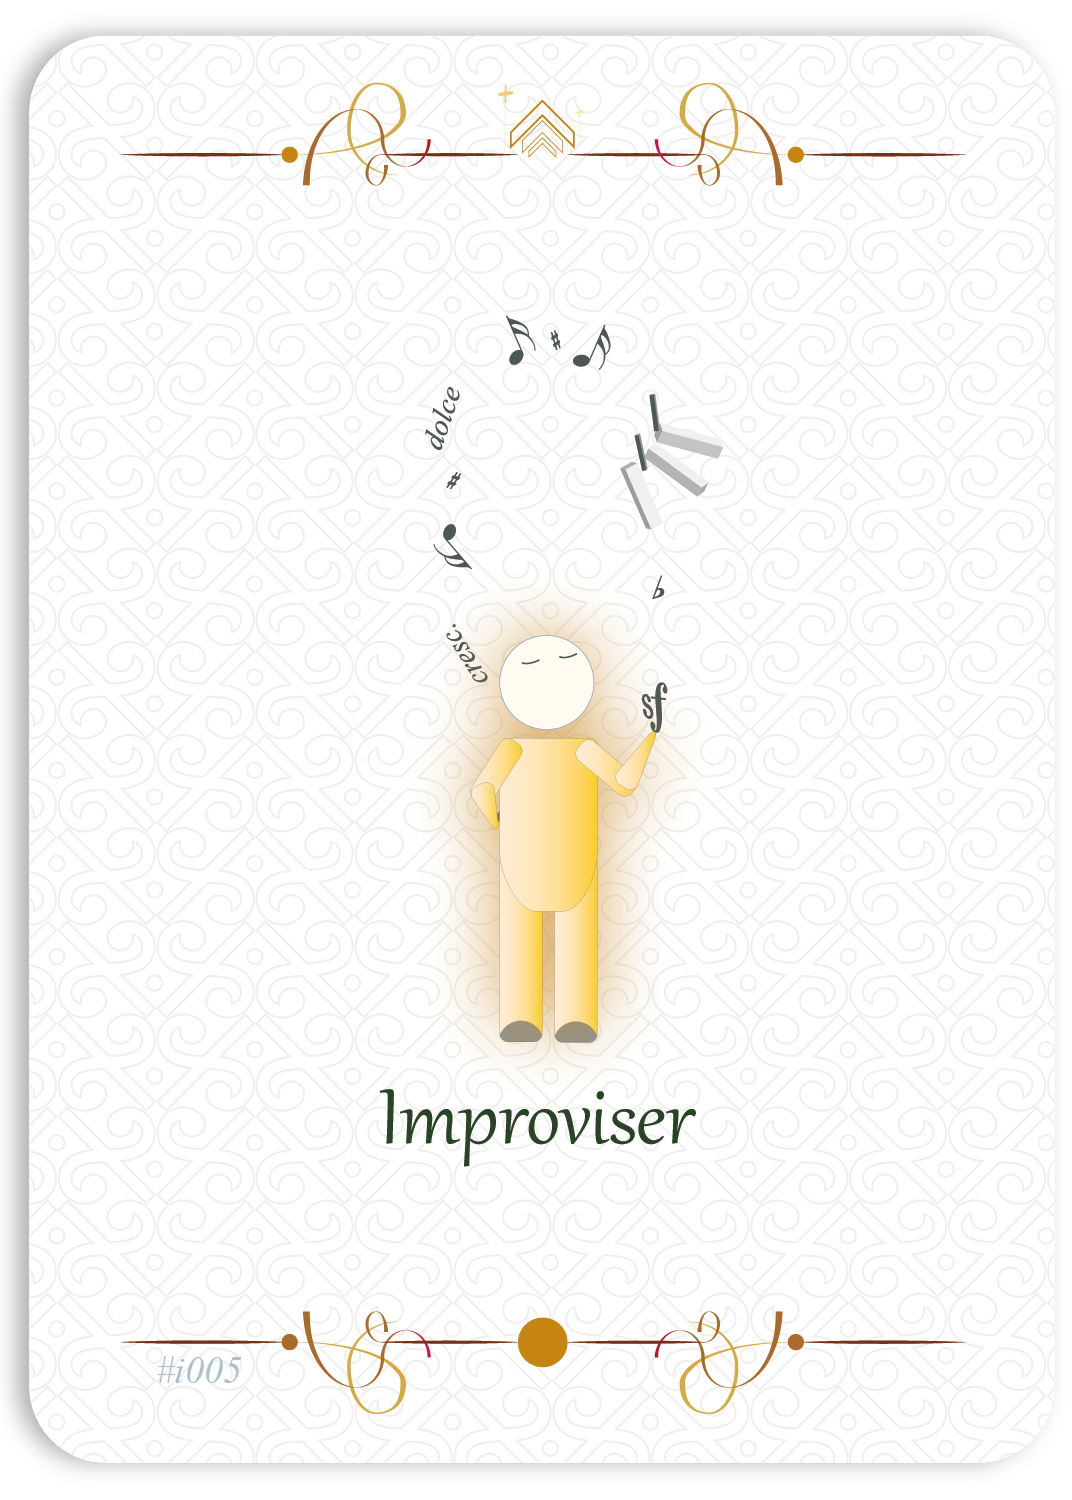 Improviser